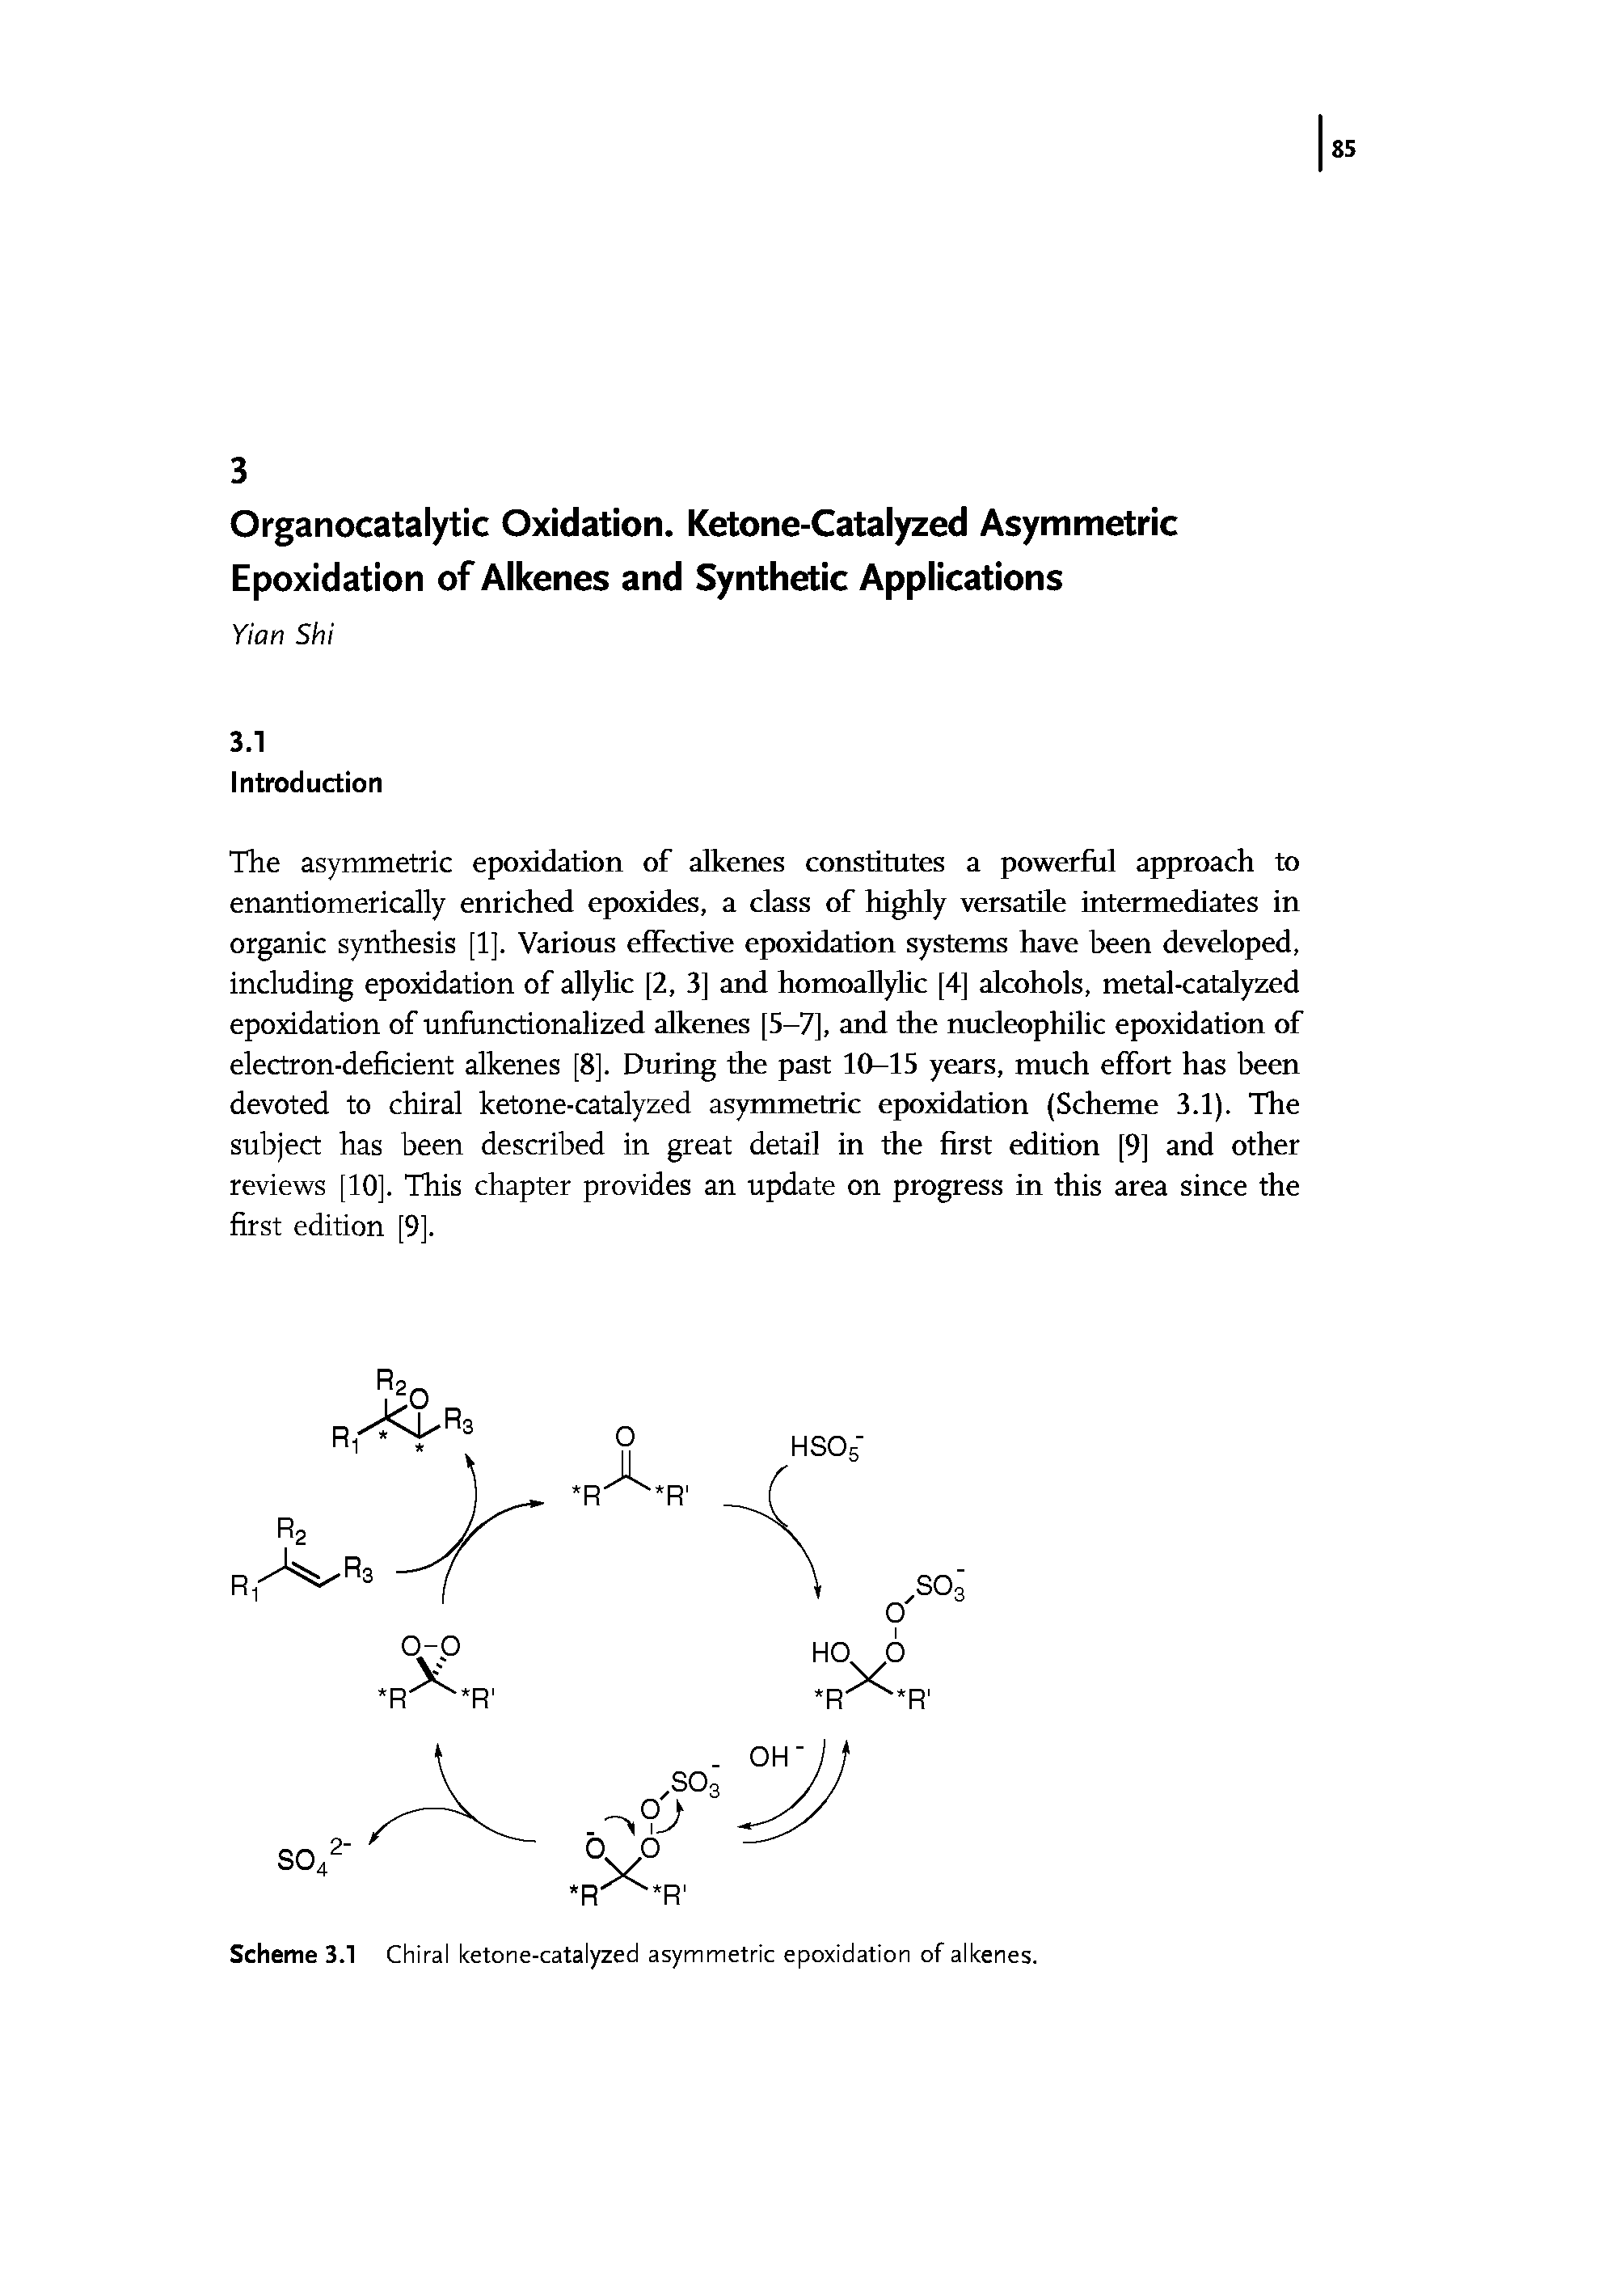 Scheme 3.1 Chiral ketone-catalyzed asymmetric epoxidation of alkenes.